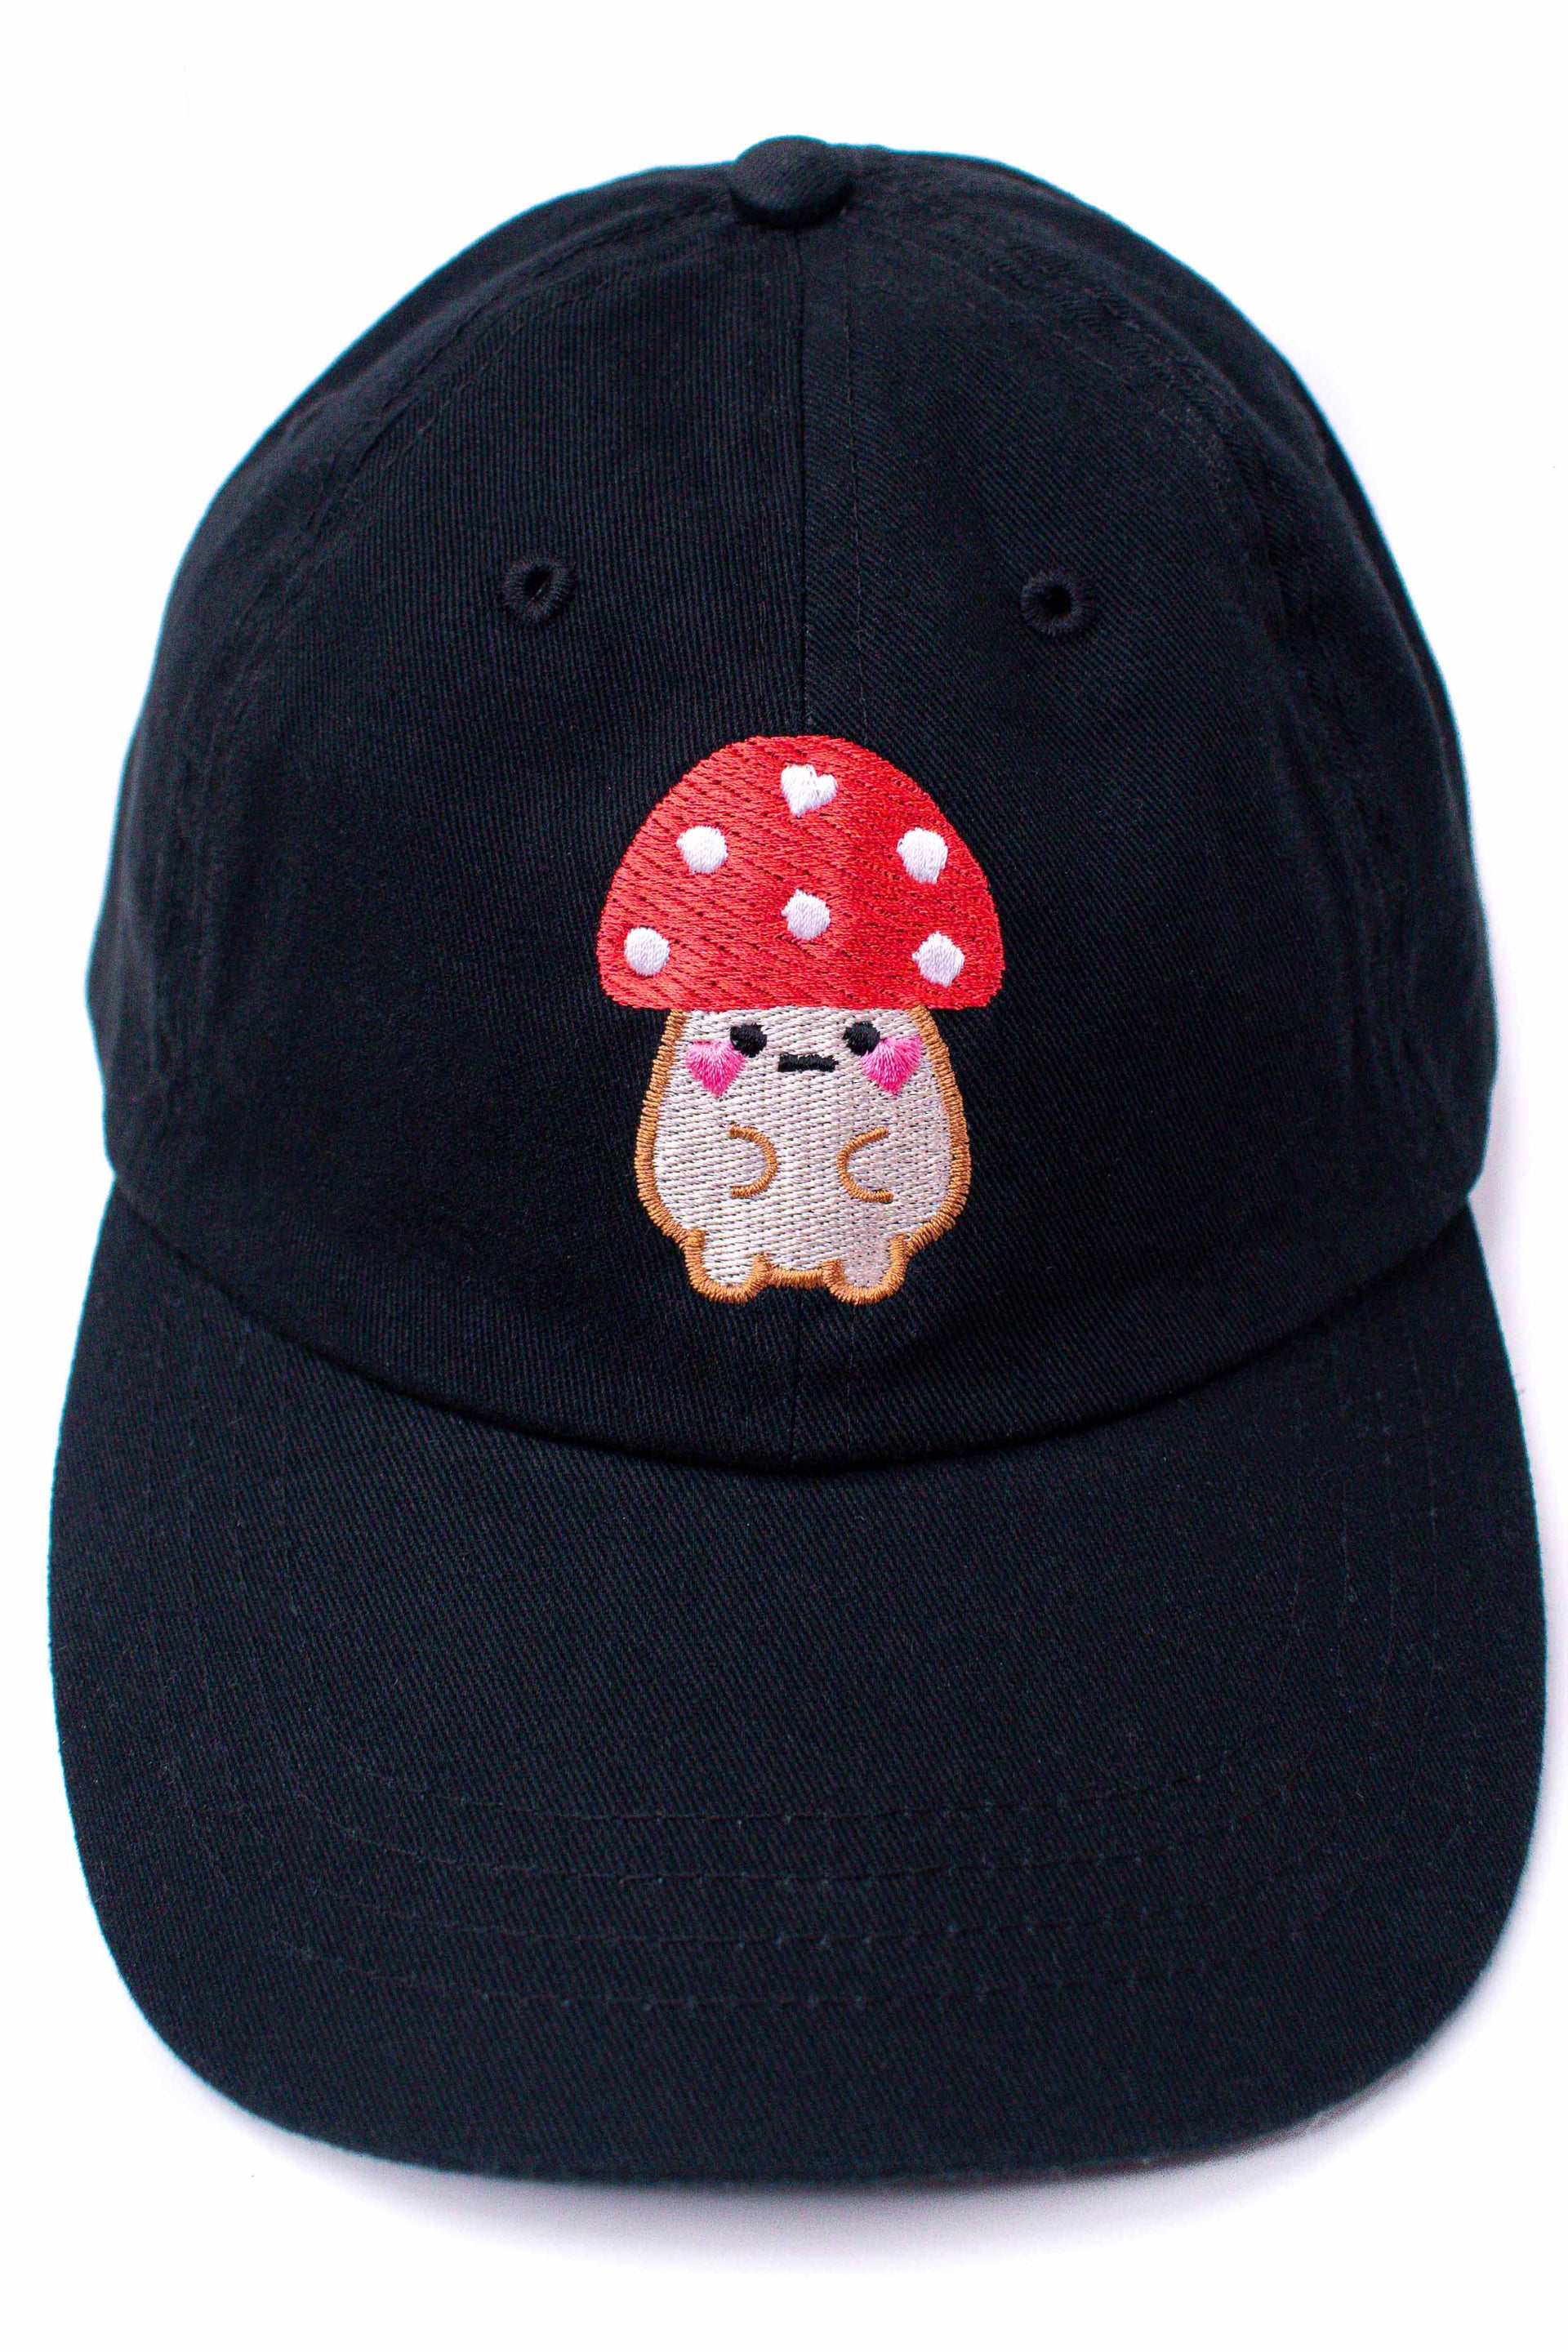 Kawaii Mushroom Embroidered Cap - Momokakkoii